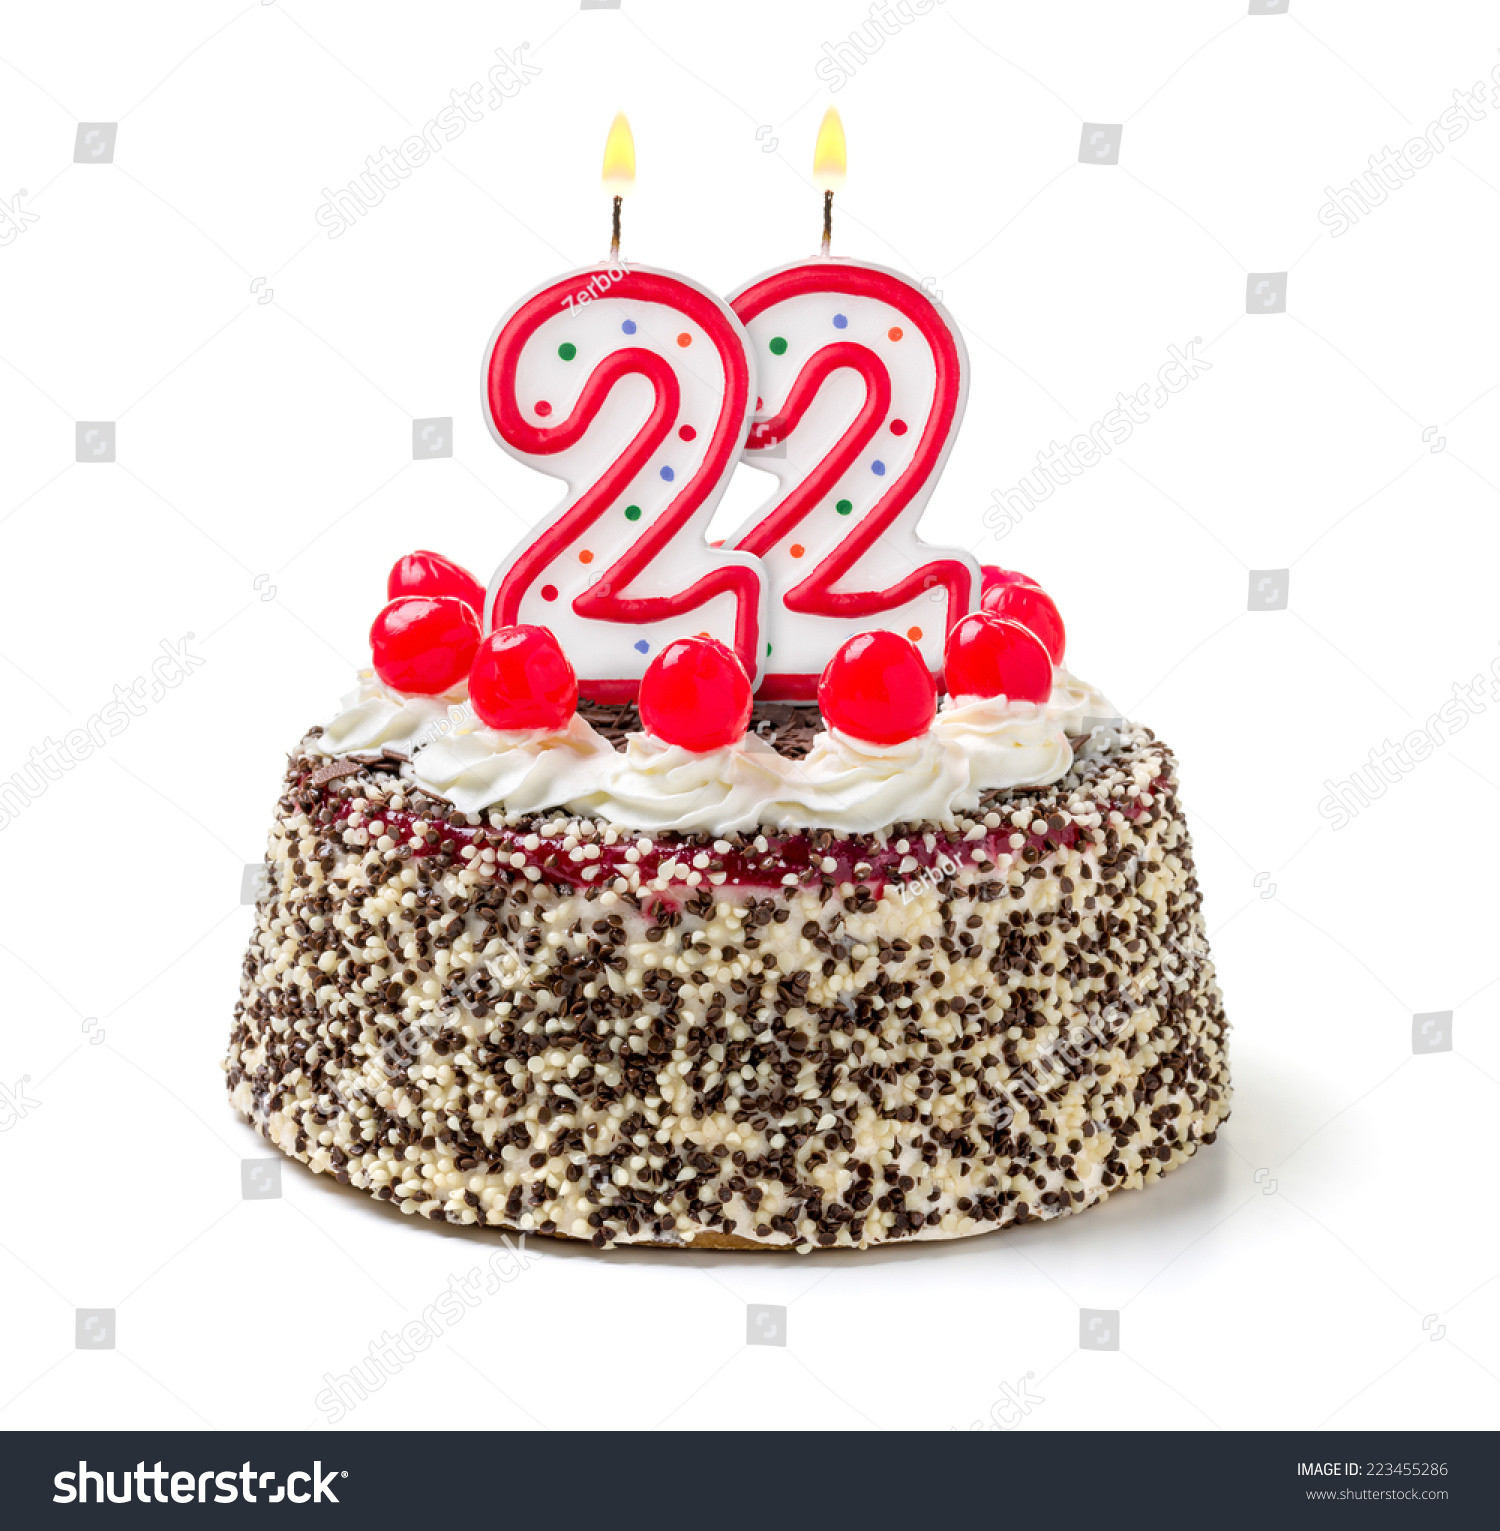 22 Birthday Cake
 Birthday Cake Burning Candle Number 22 Stock